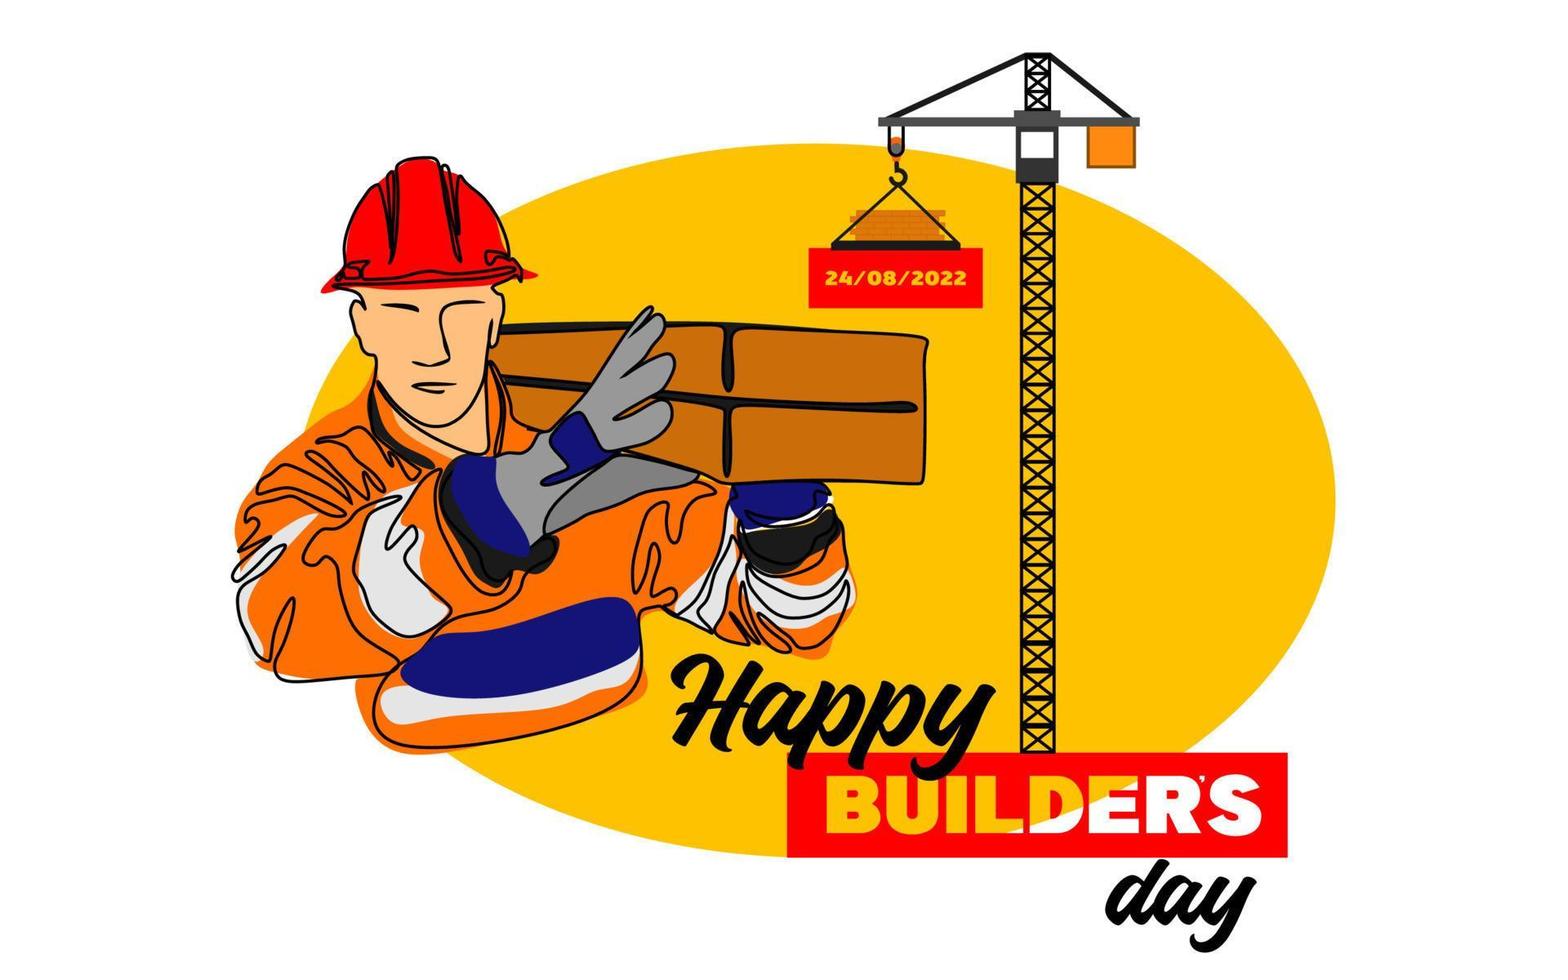 Tag der Bauarbeiter, Tag der Ingenieure, Tag der Kranführer, Tag der Architekten, Tag der Arbeit Konzeptvektorillustration vektor